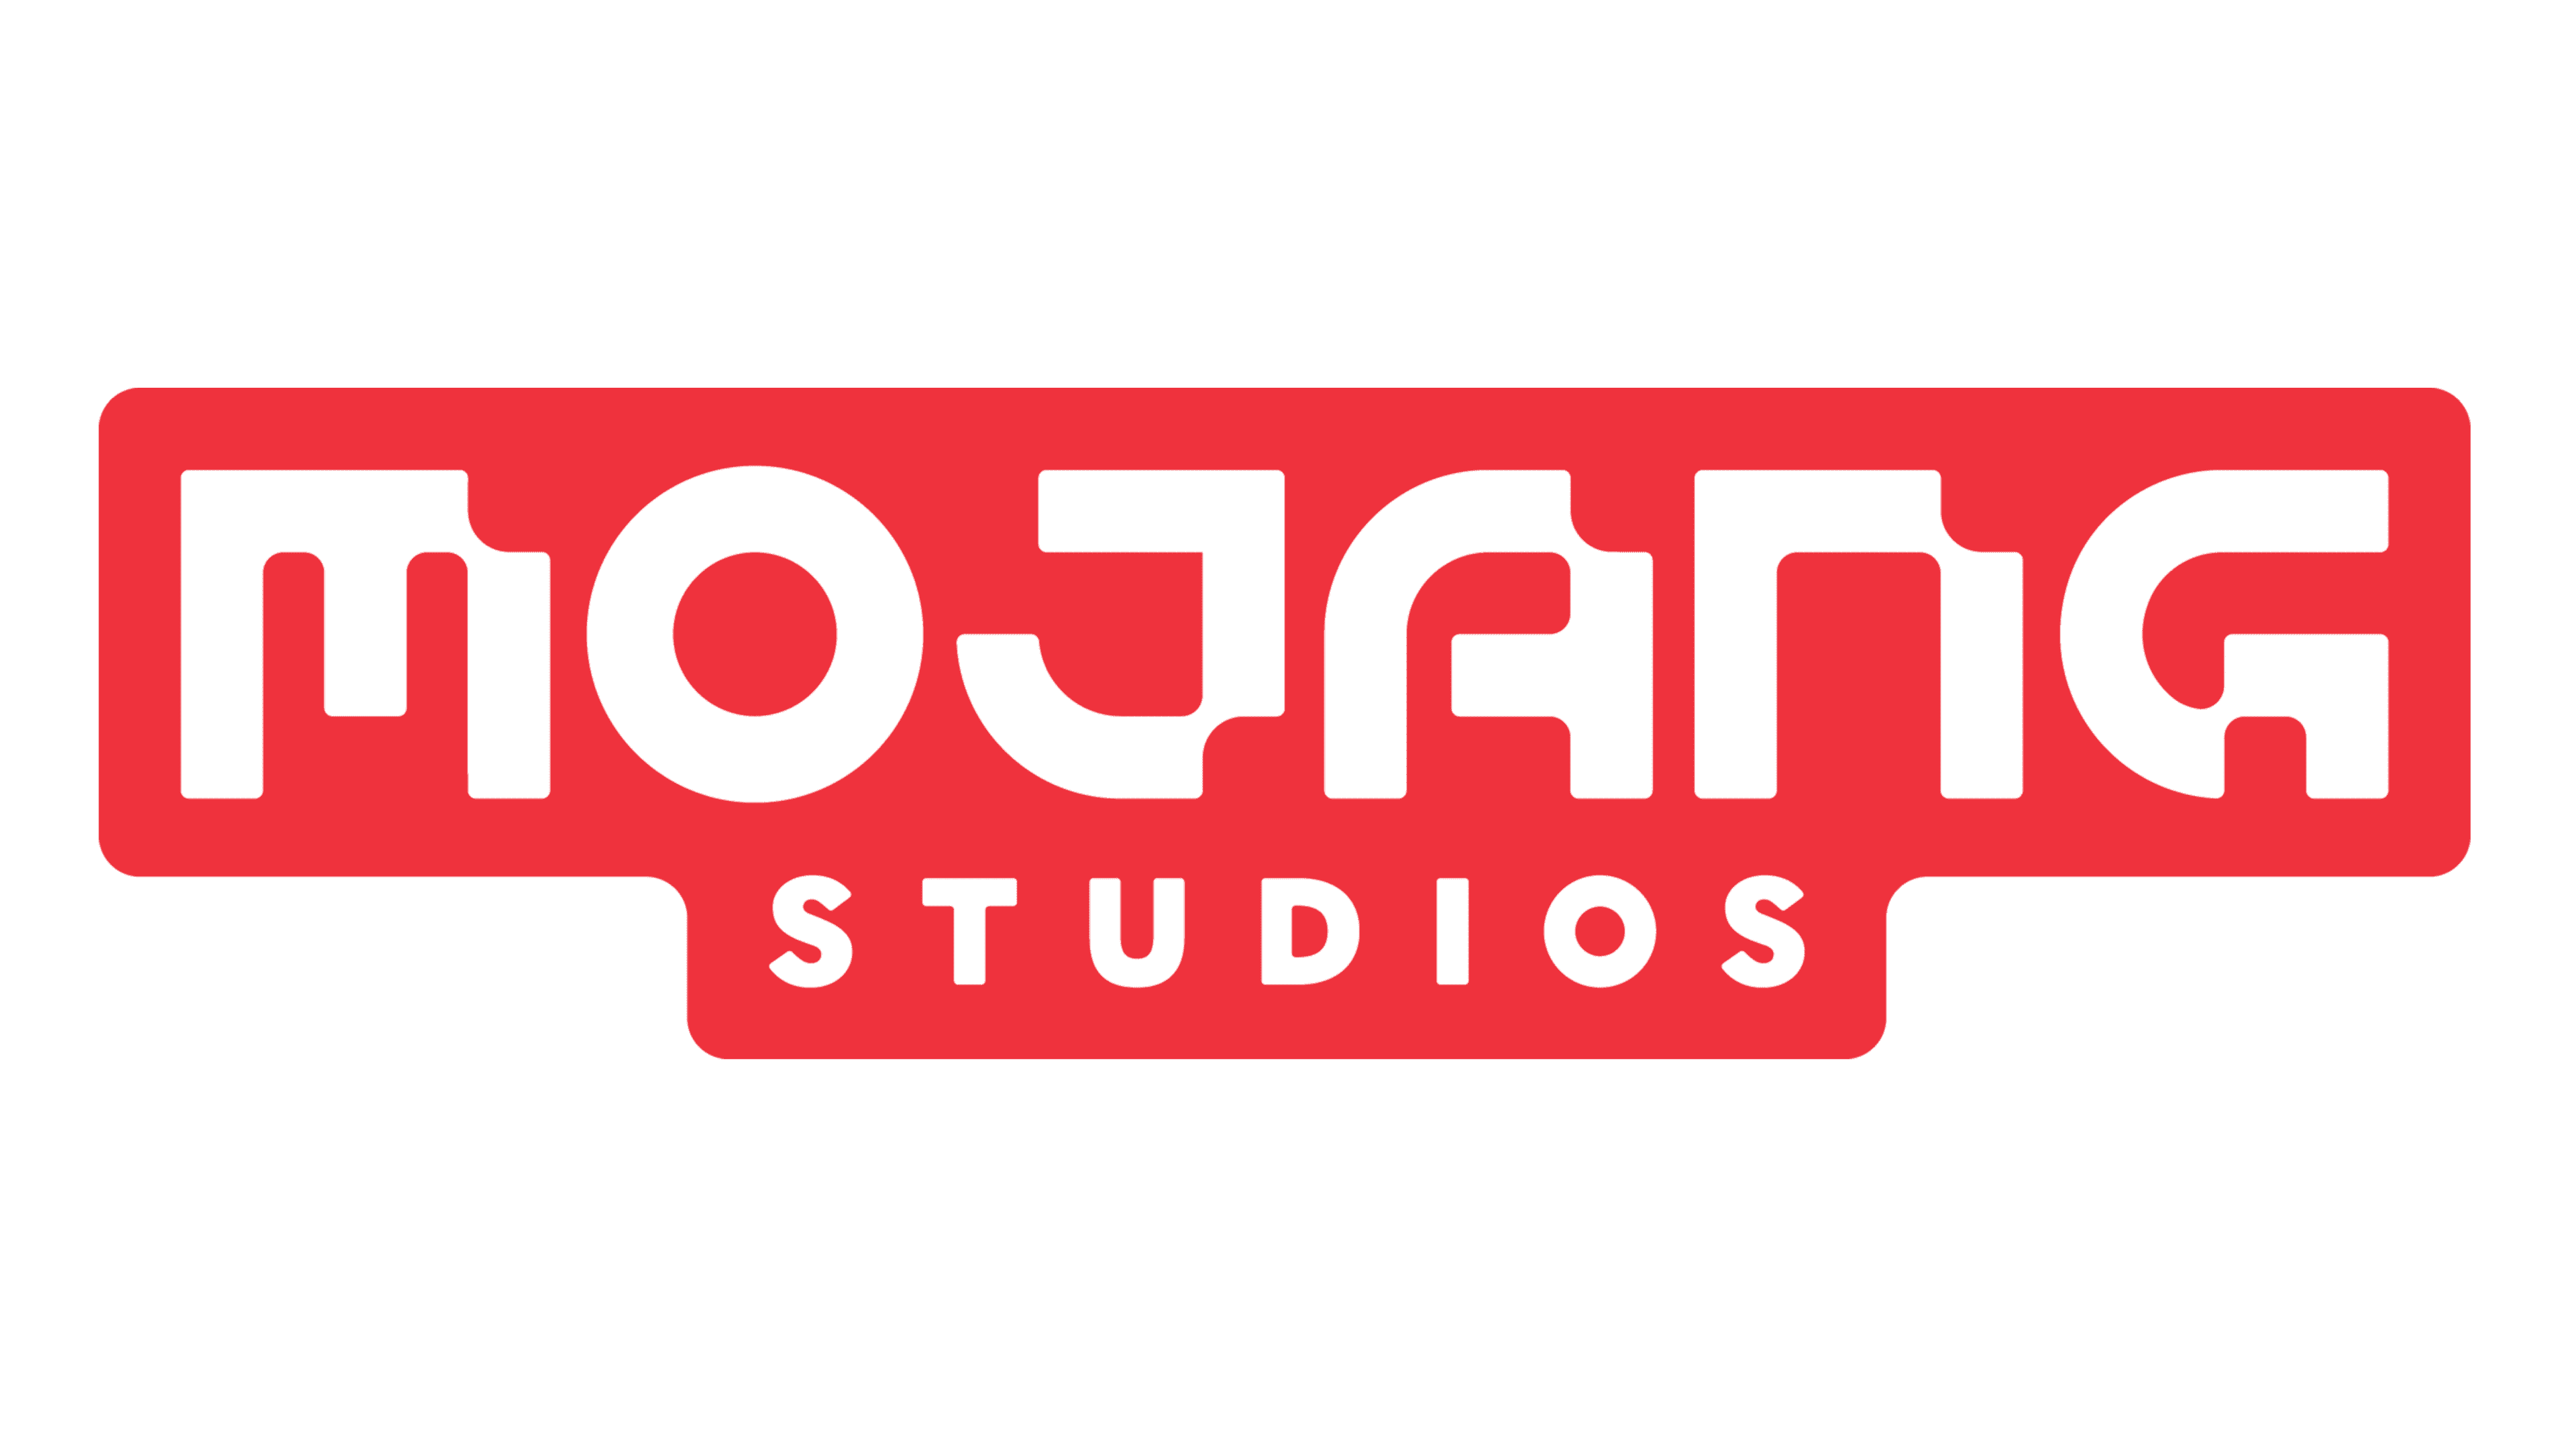 Mojang Studios' logo